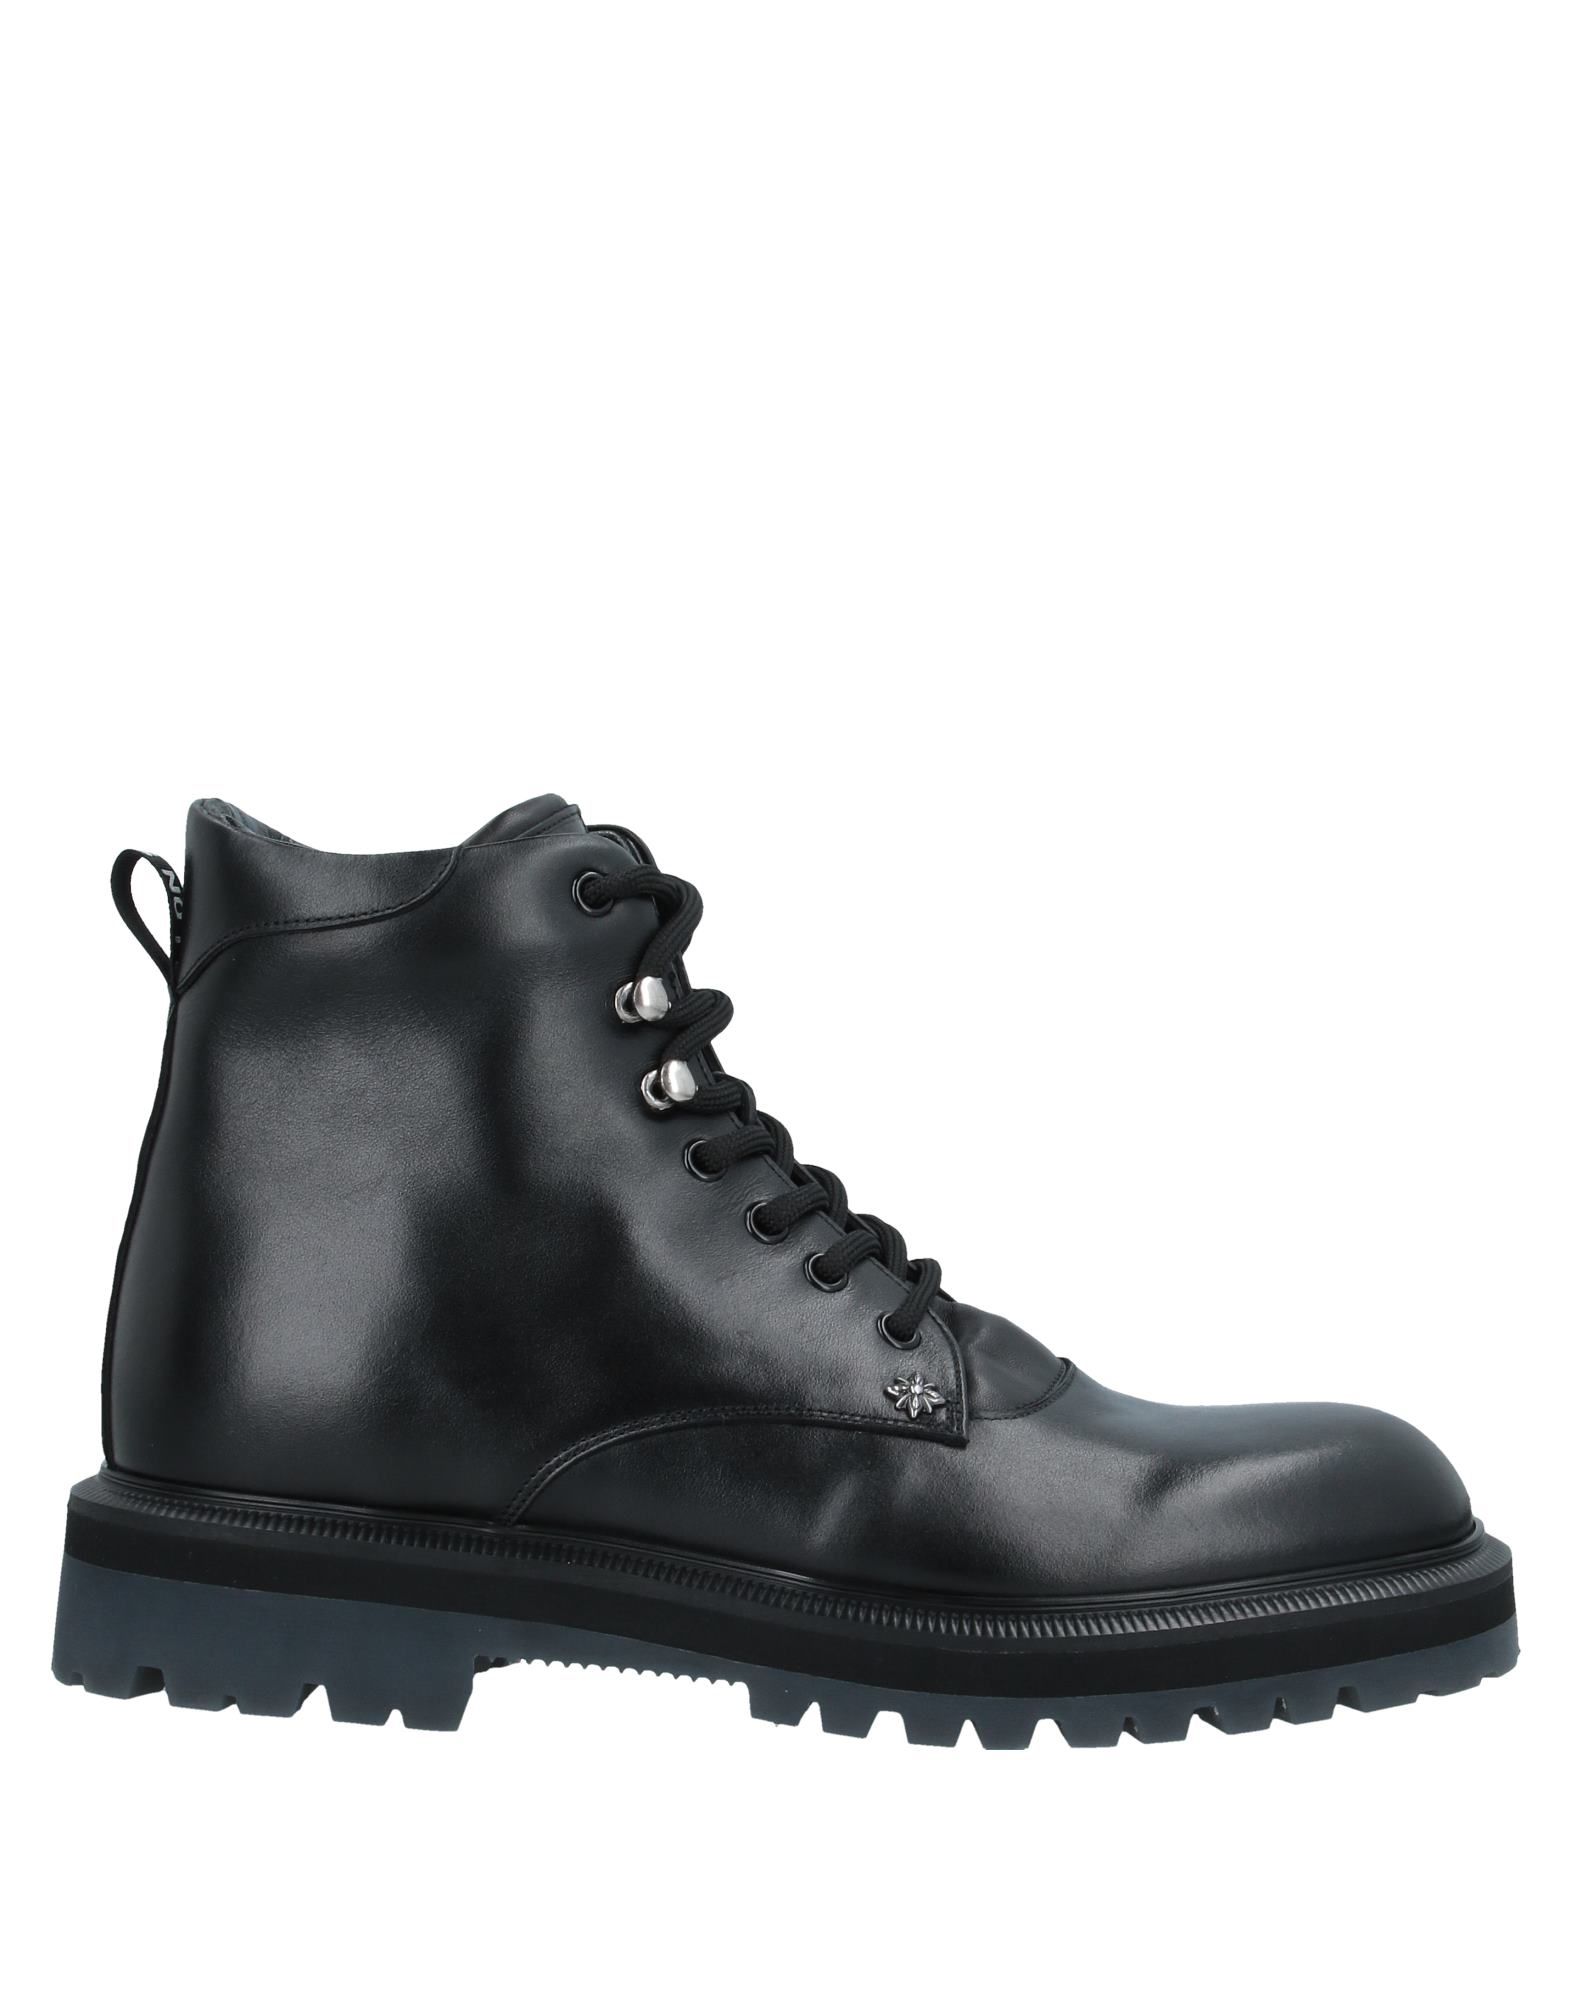 JOHN RICHMOND Ankle boots - Item 11936484